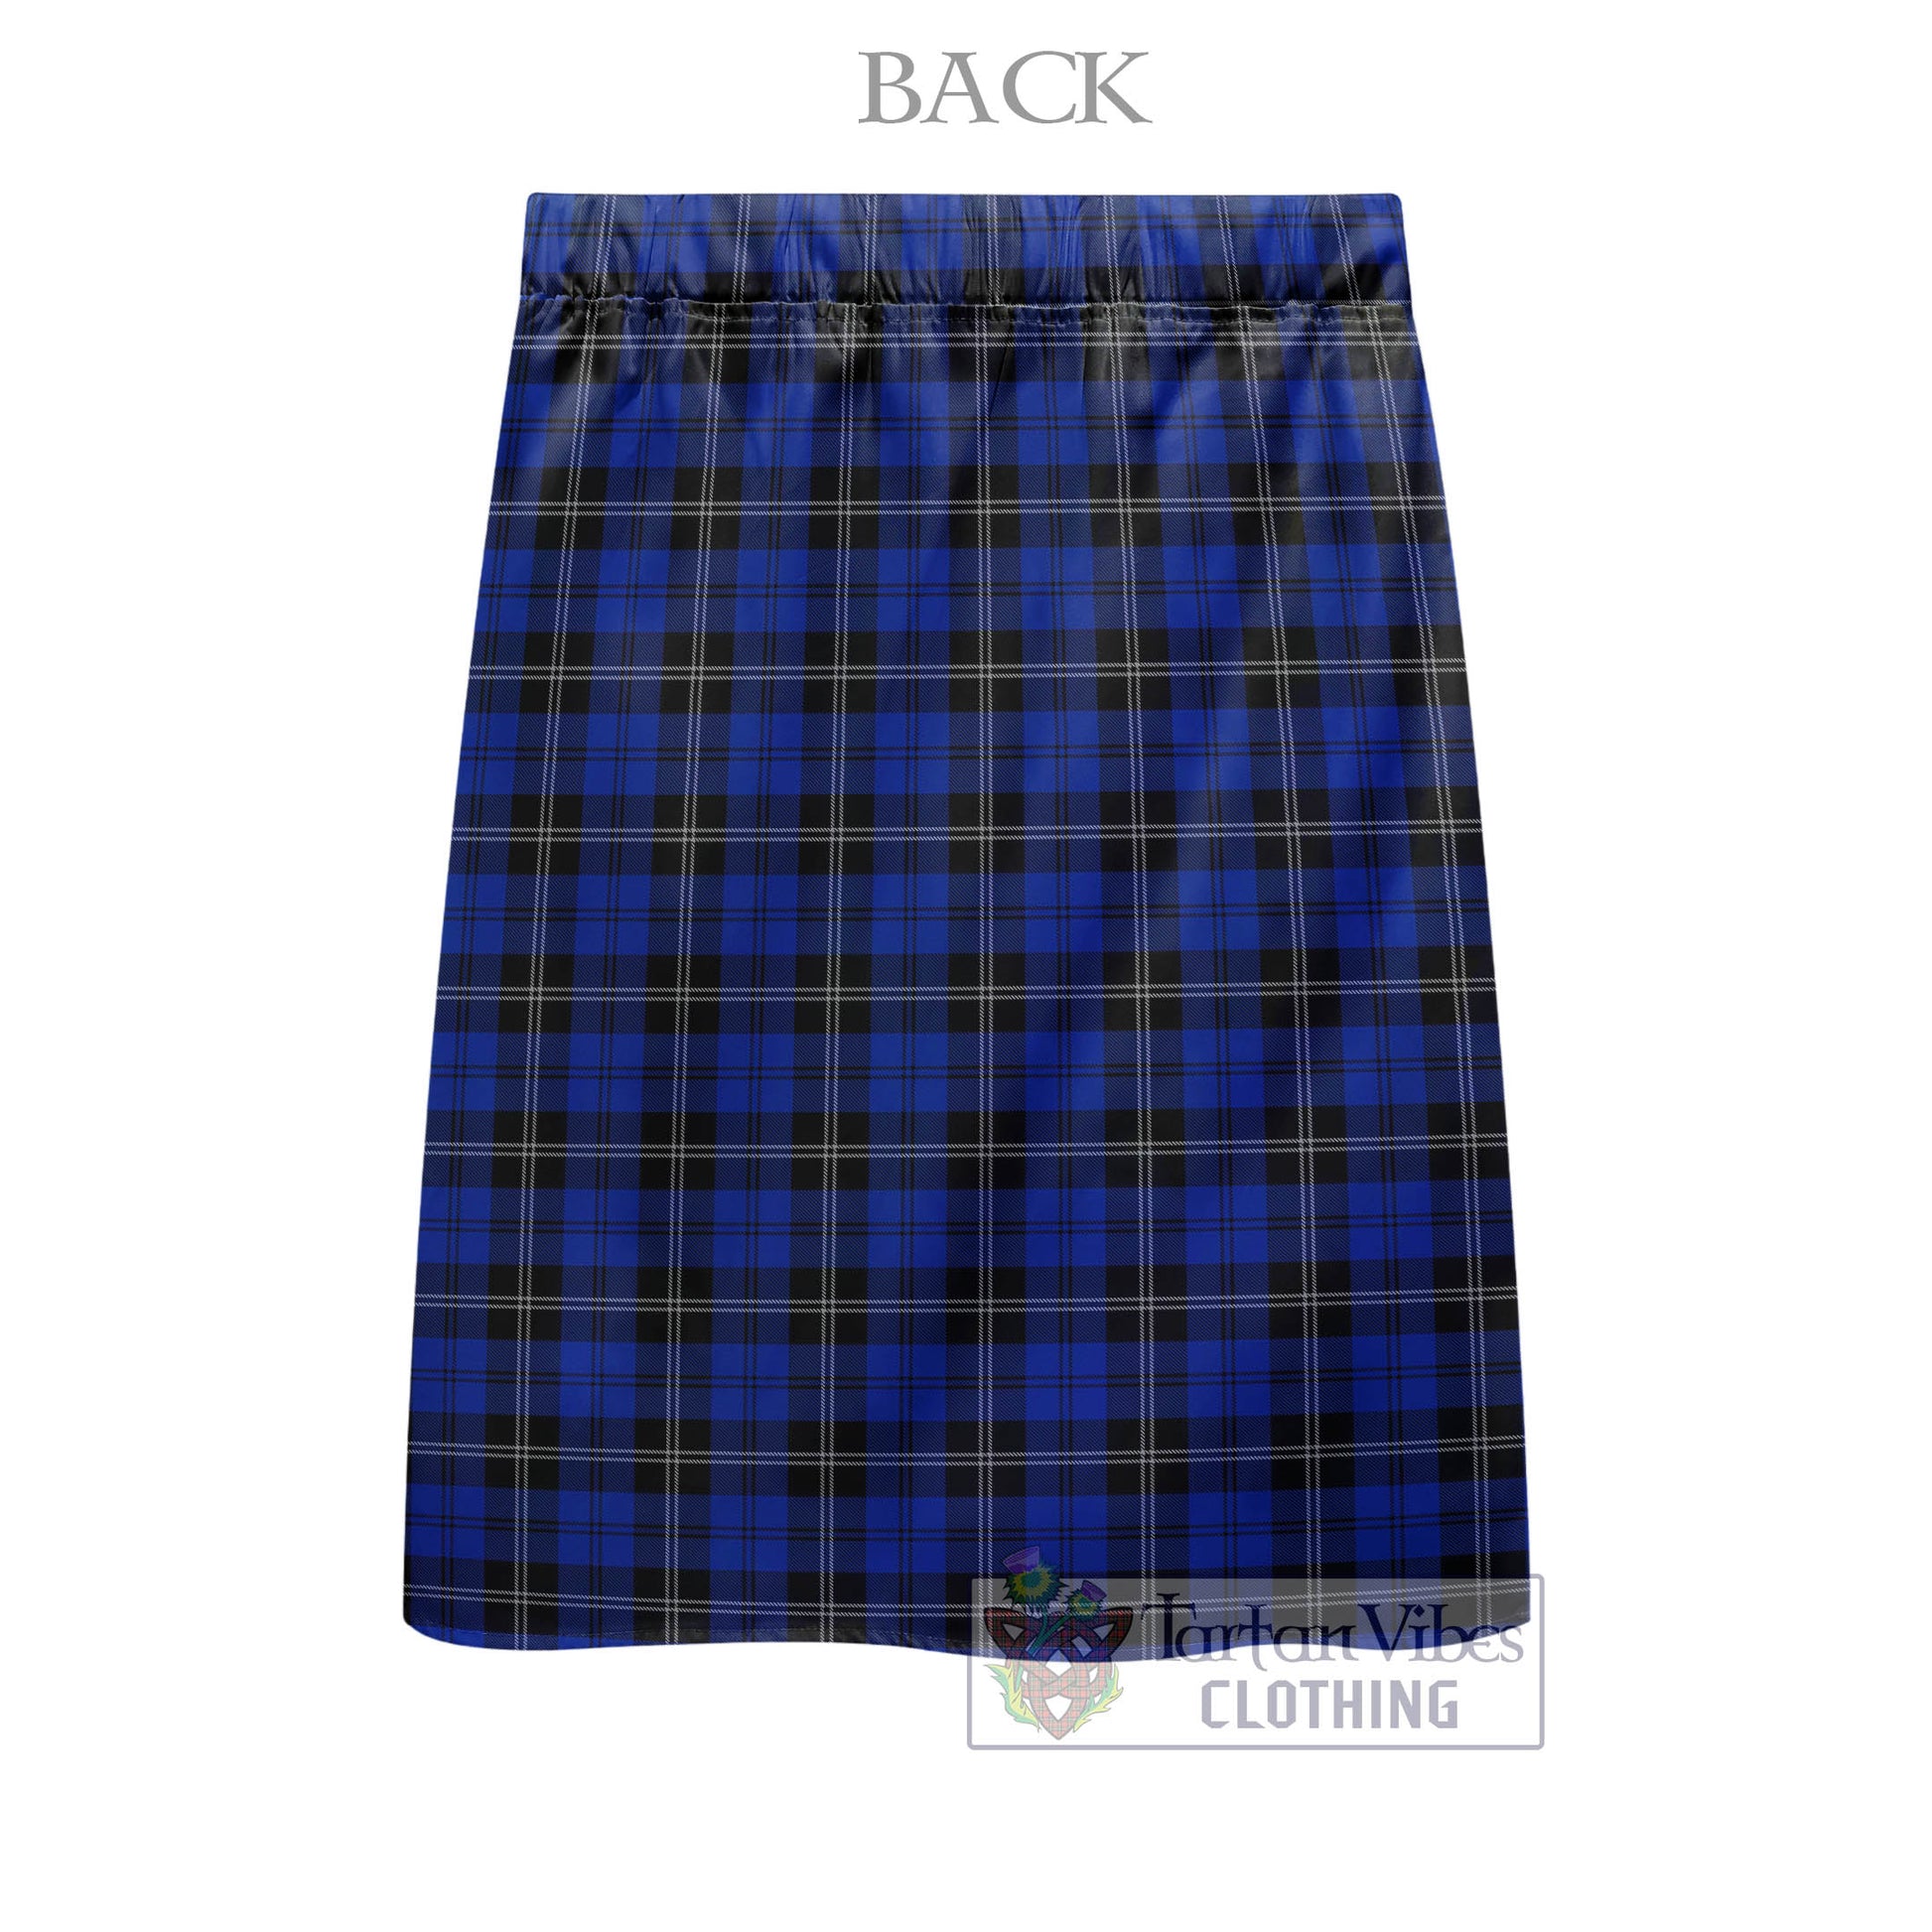 Tartan Vibes Clothing Swan Tartan Men's Pleated Skirt - Fashion Casual Retro Scottish Style